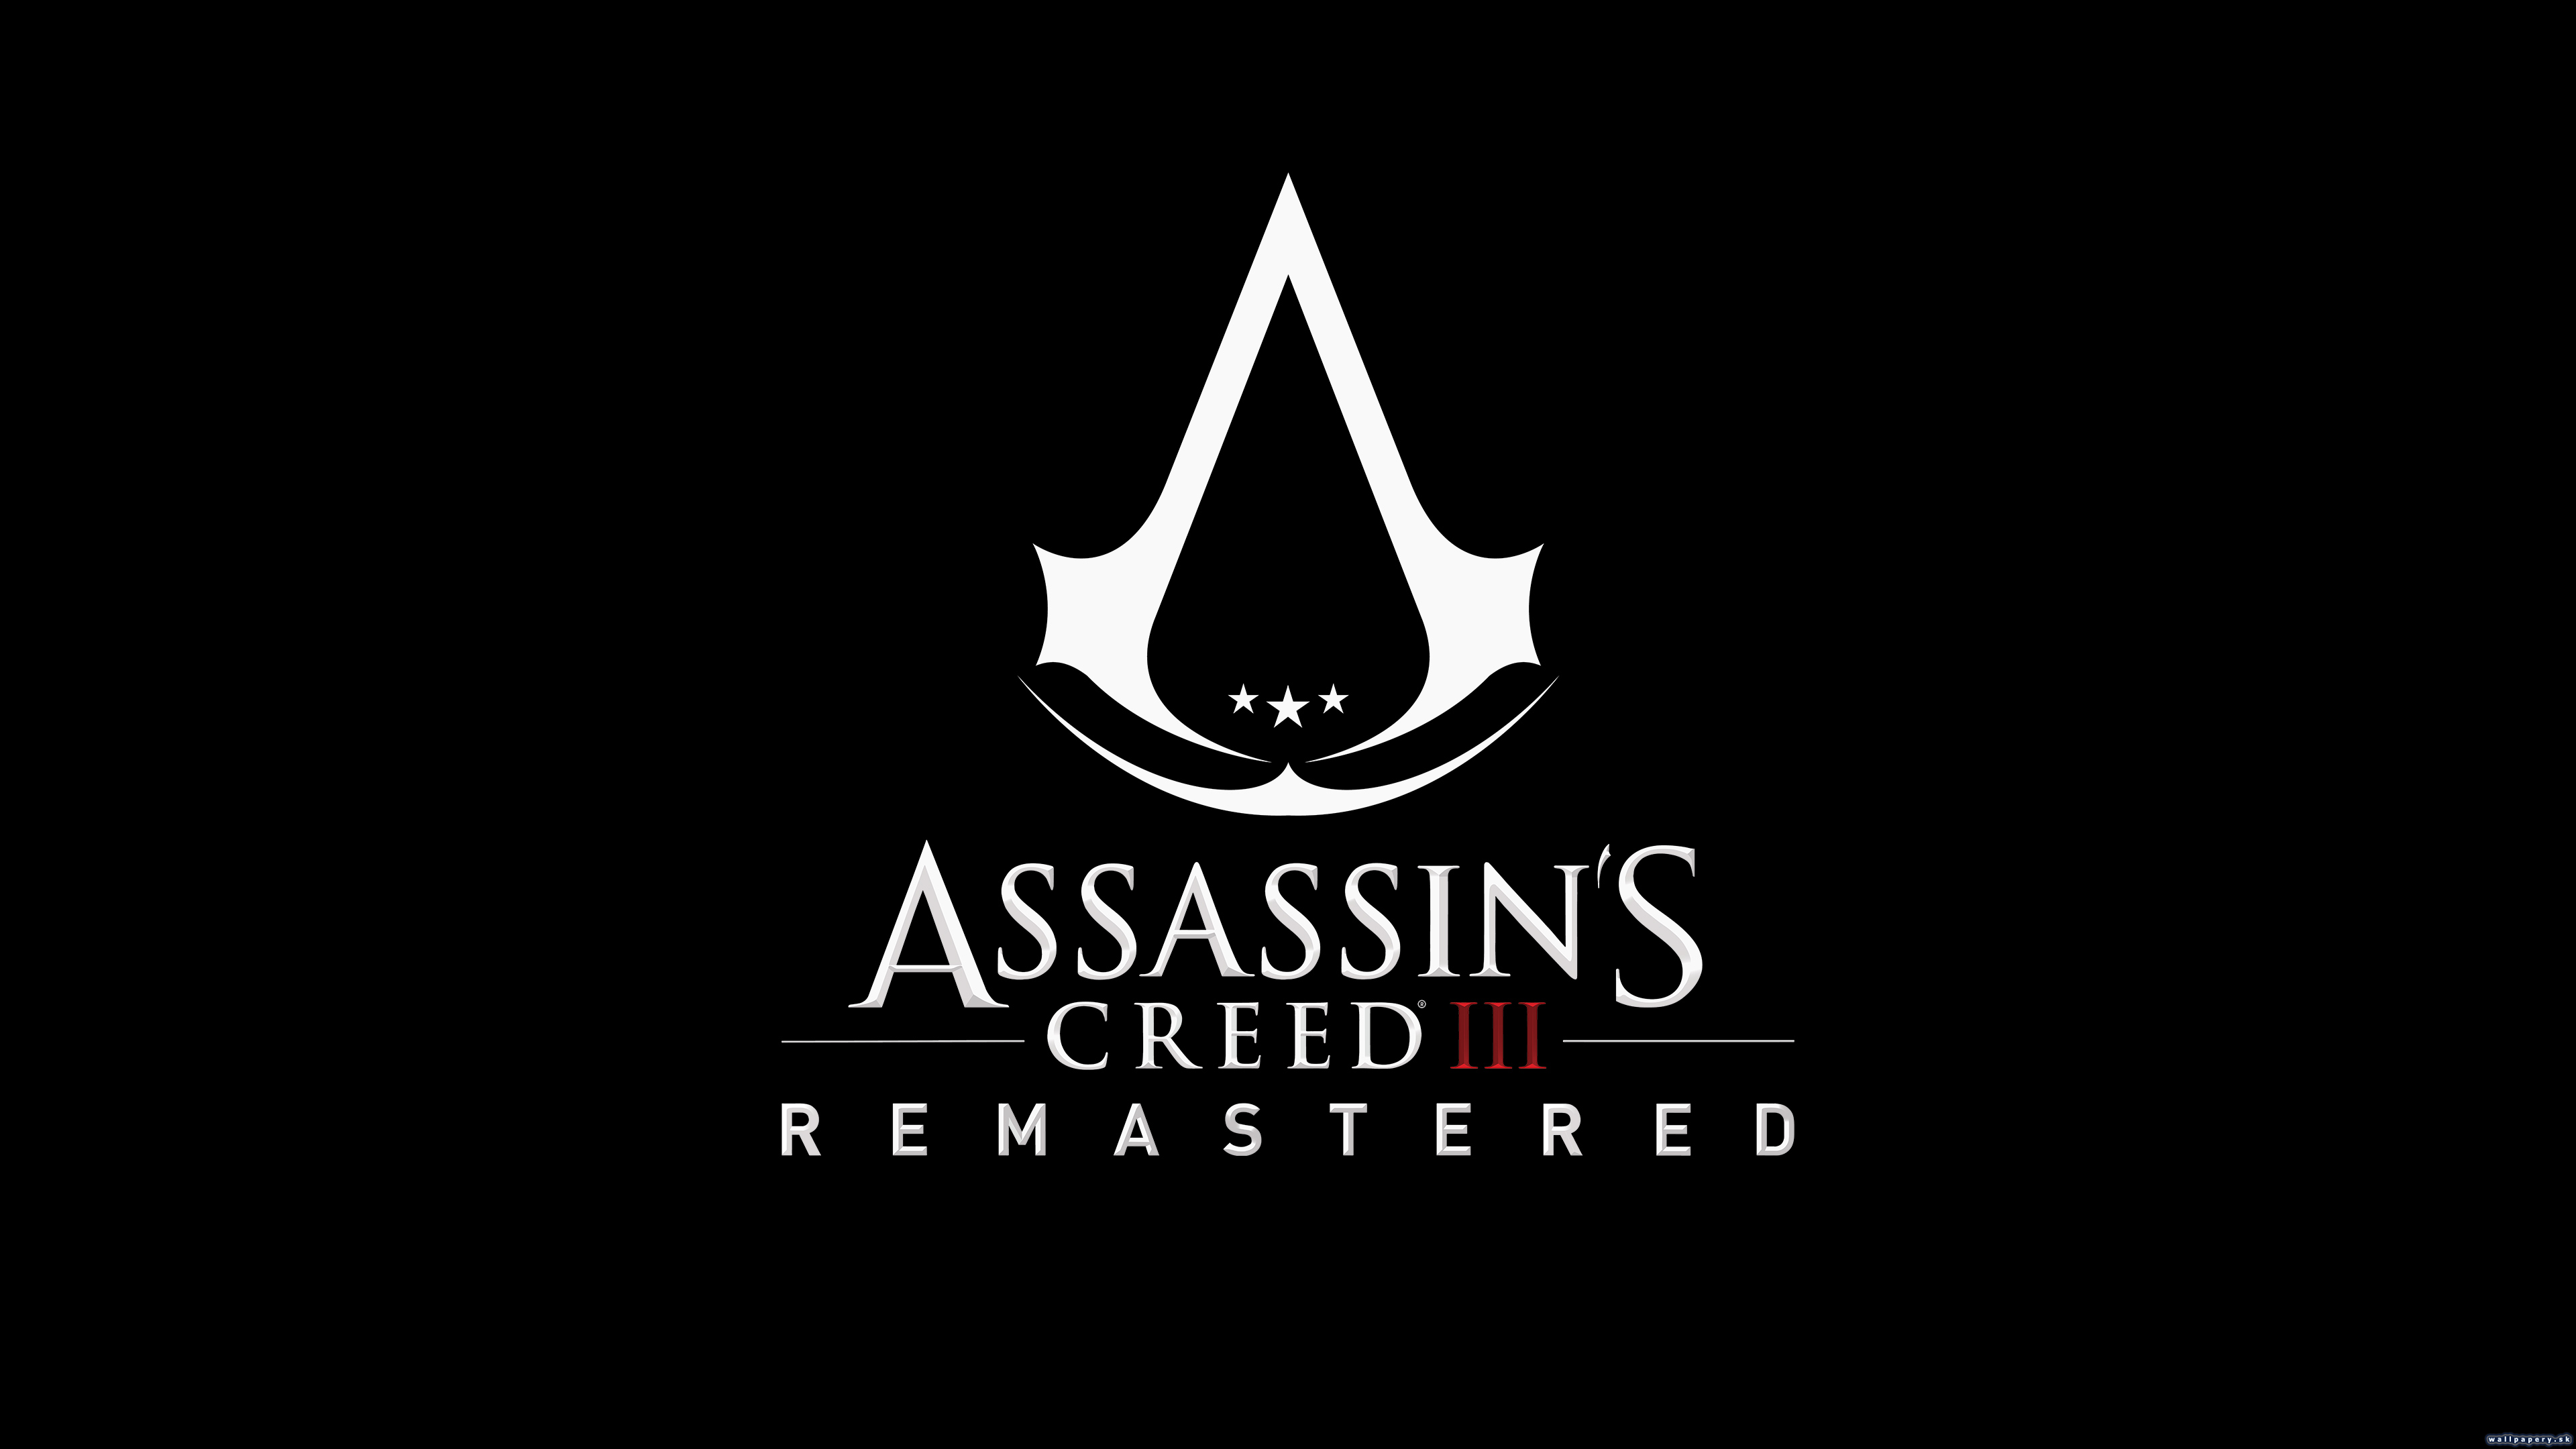 Assassin's Creed III Remastered - wallpaper 2